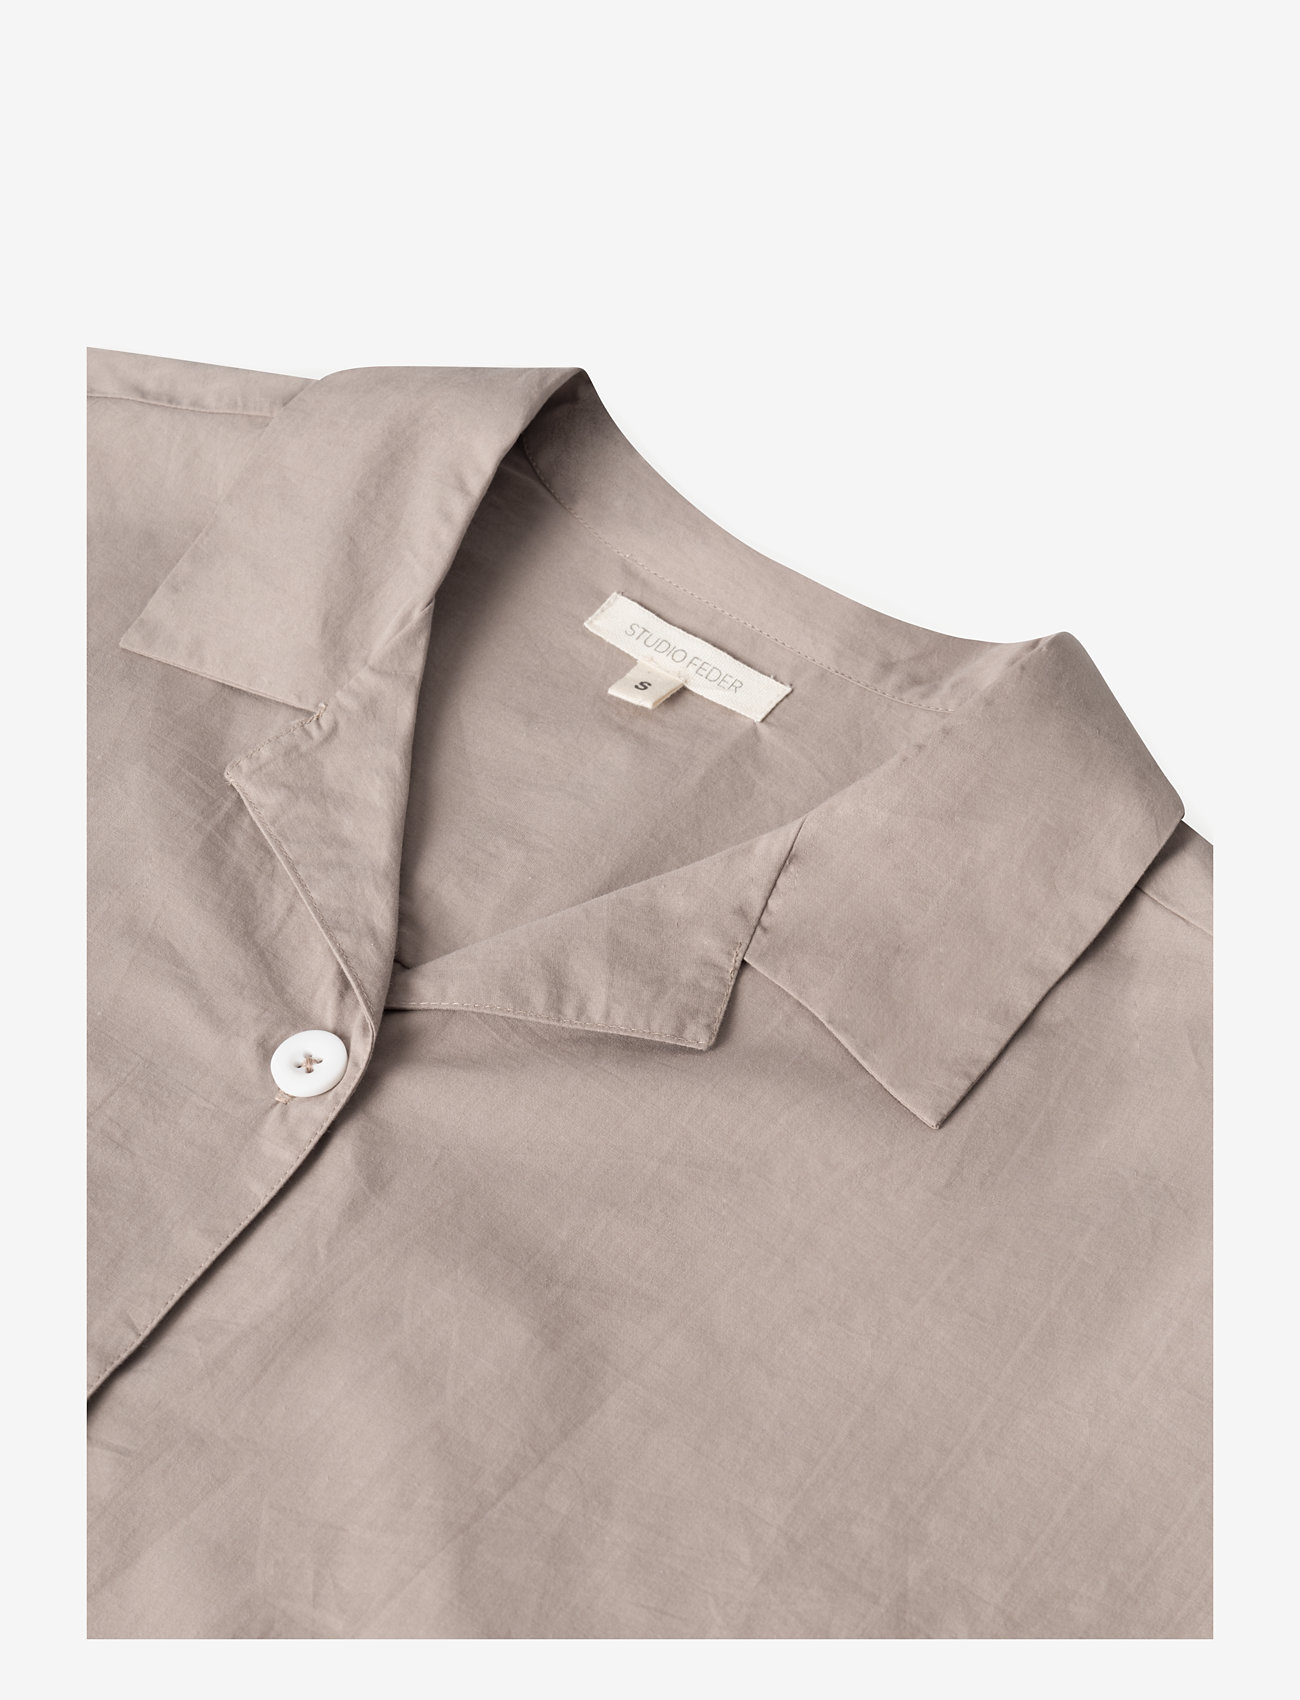 STUDIO FEDER - SILJA SHIRT - TAUPE - long-sleeved shirts - taupe - 1